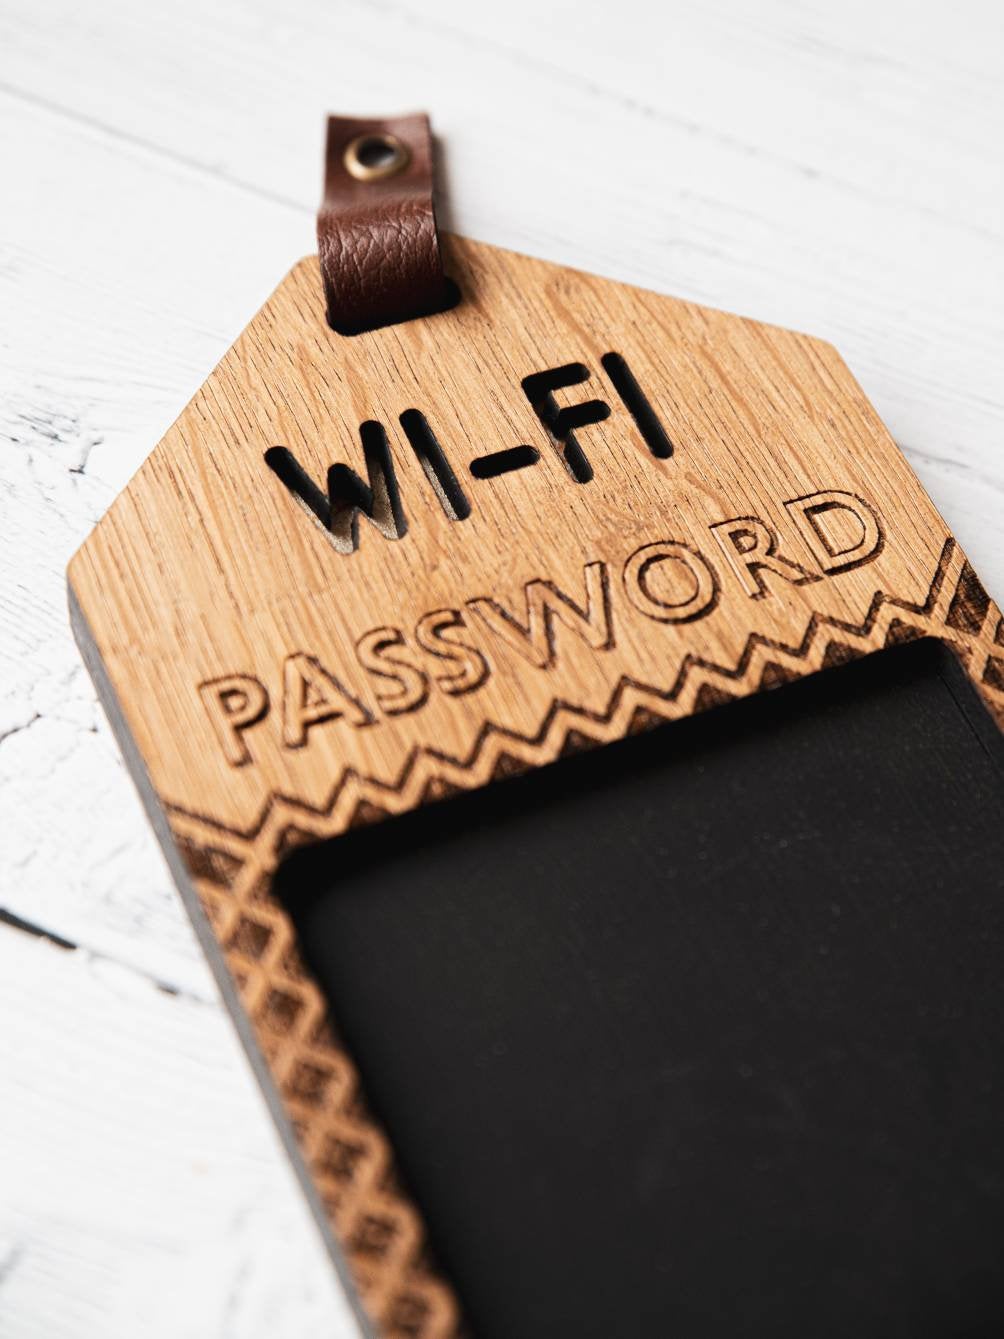 WiFi Password Sign | Wooden Hanging Blackboard Sign | Home WiFi | Guest WiFi | Entrance Hall Decor | Hotel Guest WiFi | WiFi Chalkboard